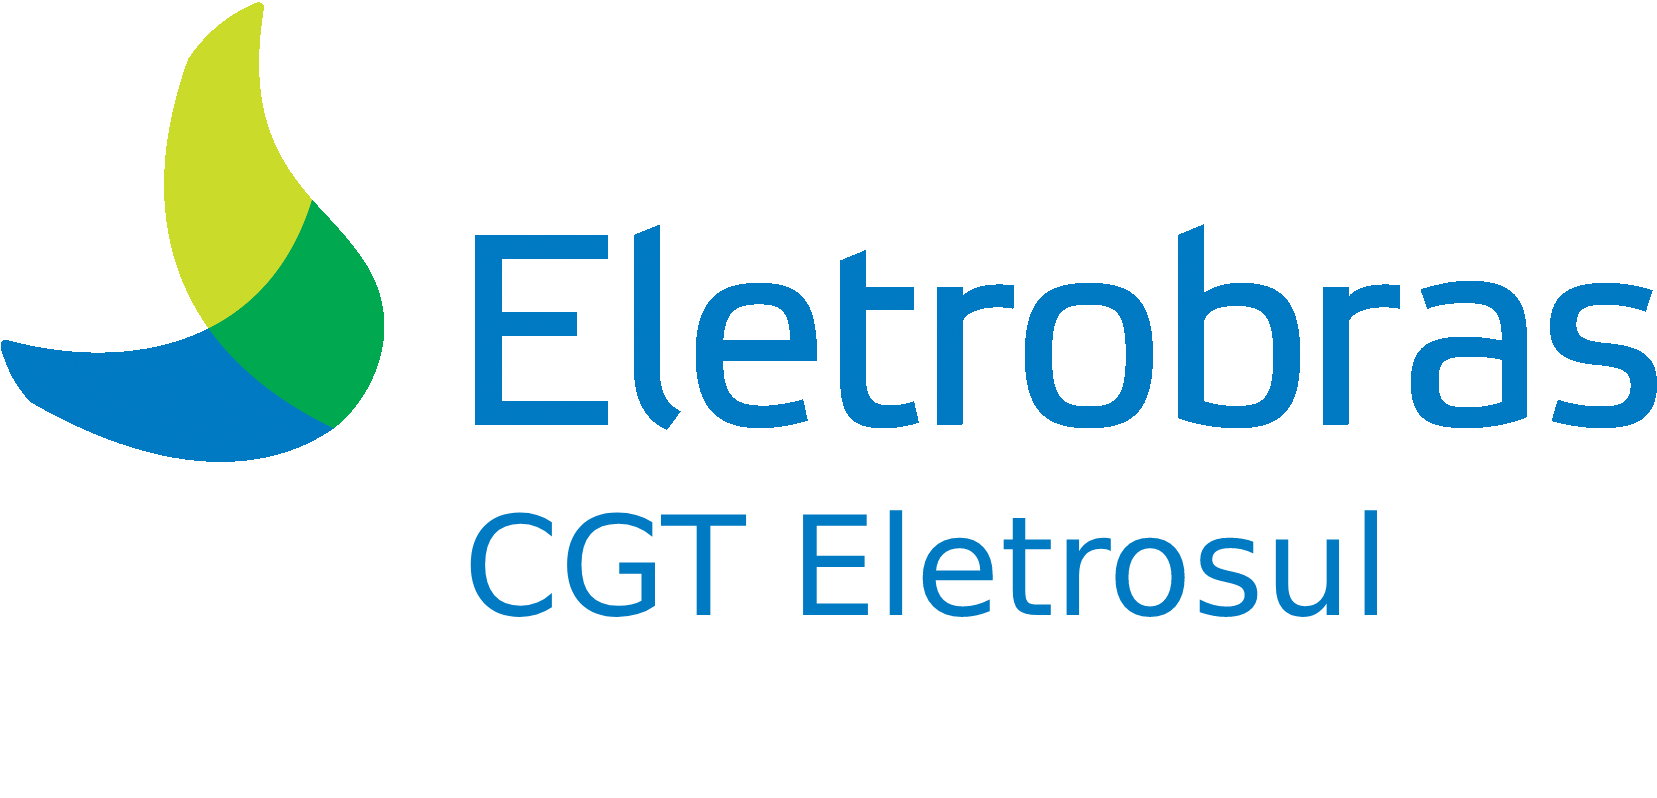 Logotipo onde se lê “Eletrobras - CGT Eletrosul”